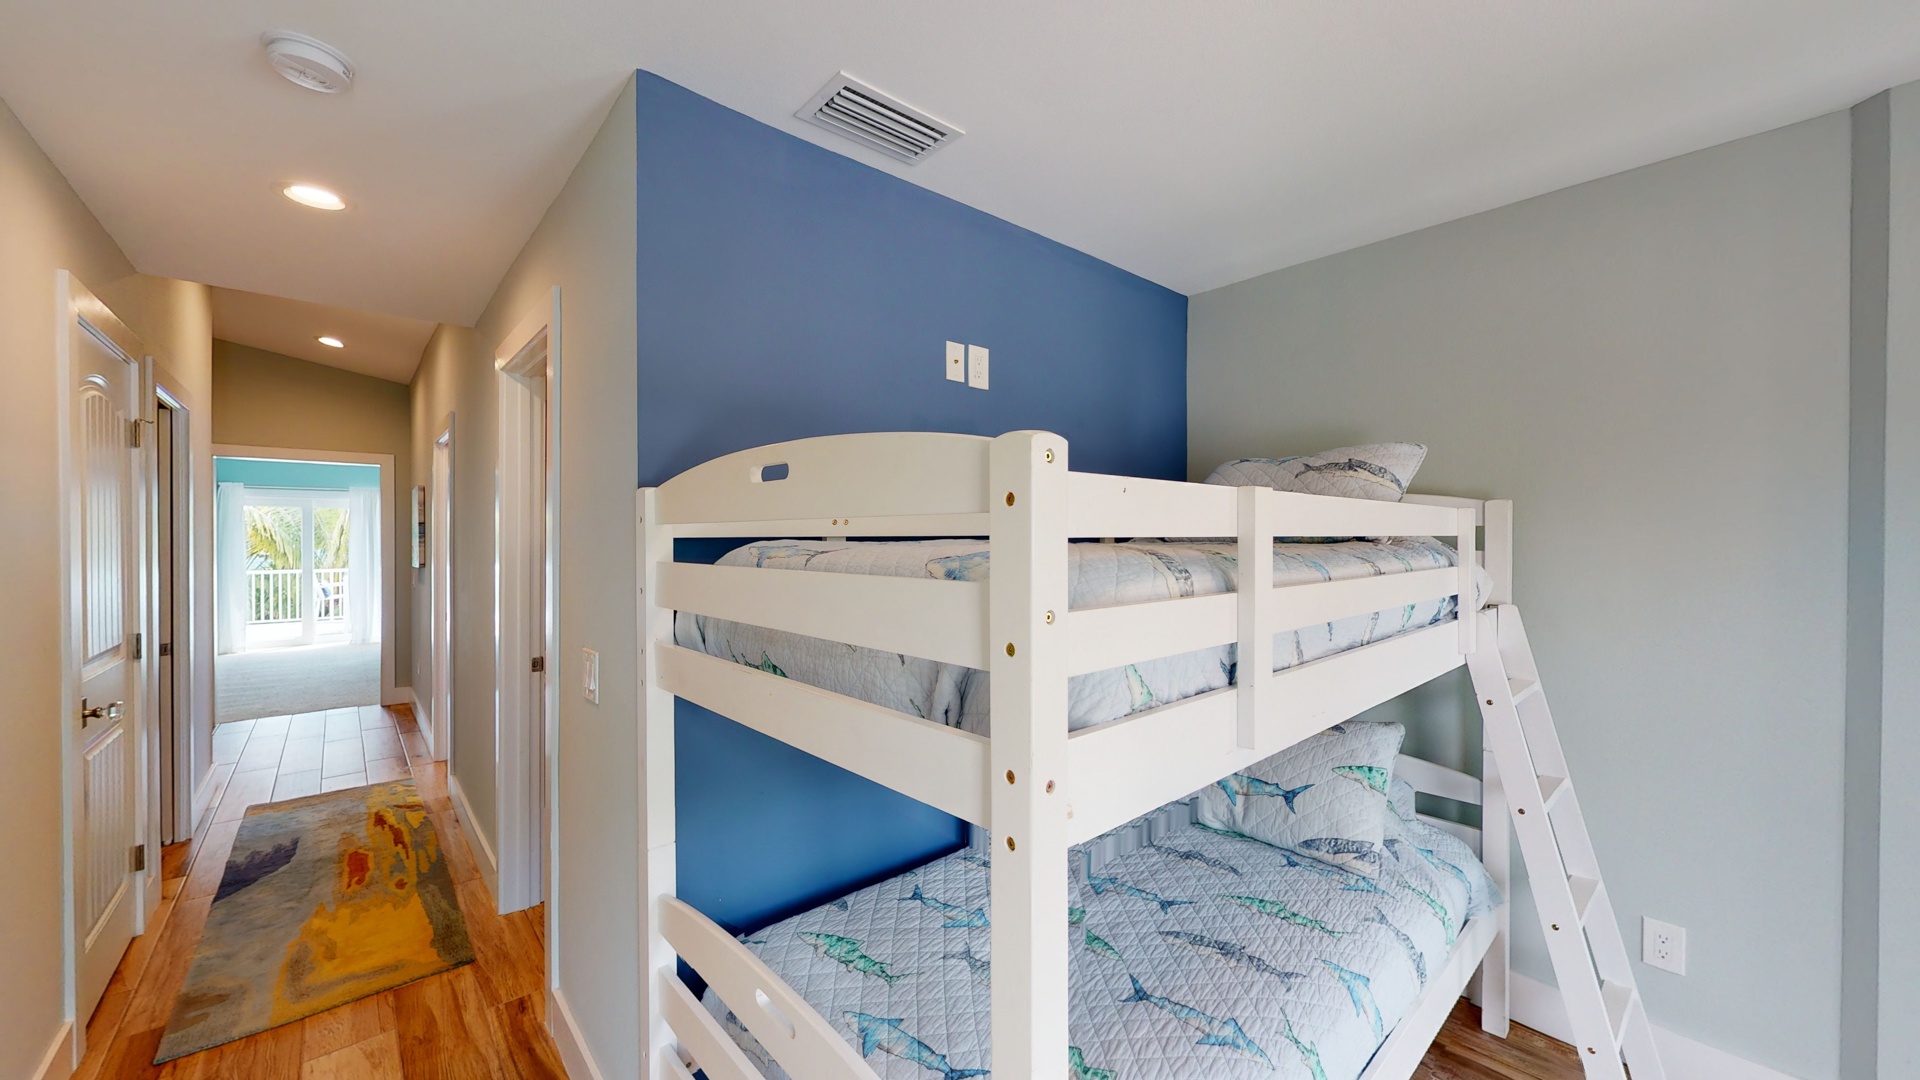 Additional Bedroom, 2nd floor-Twin over twin bunk